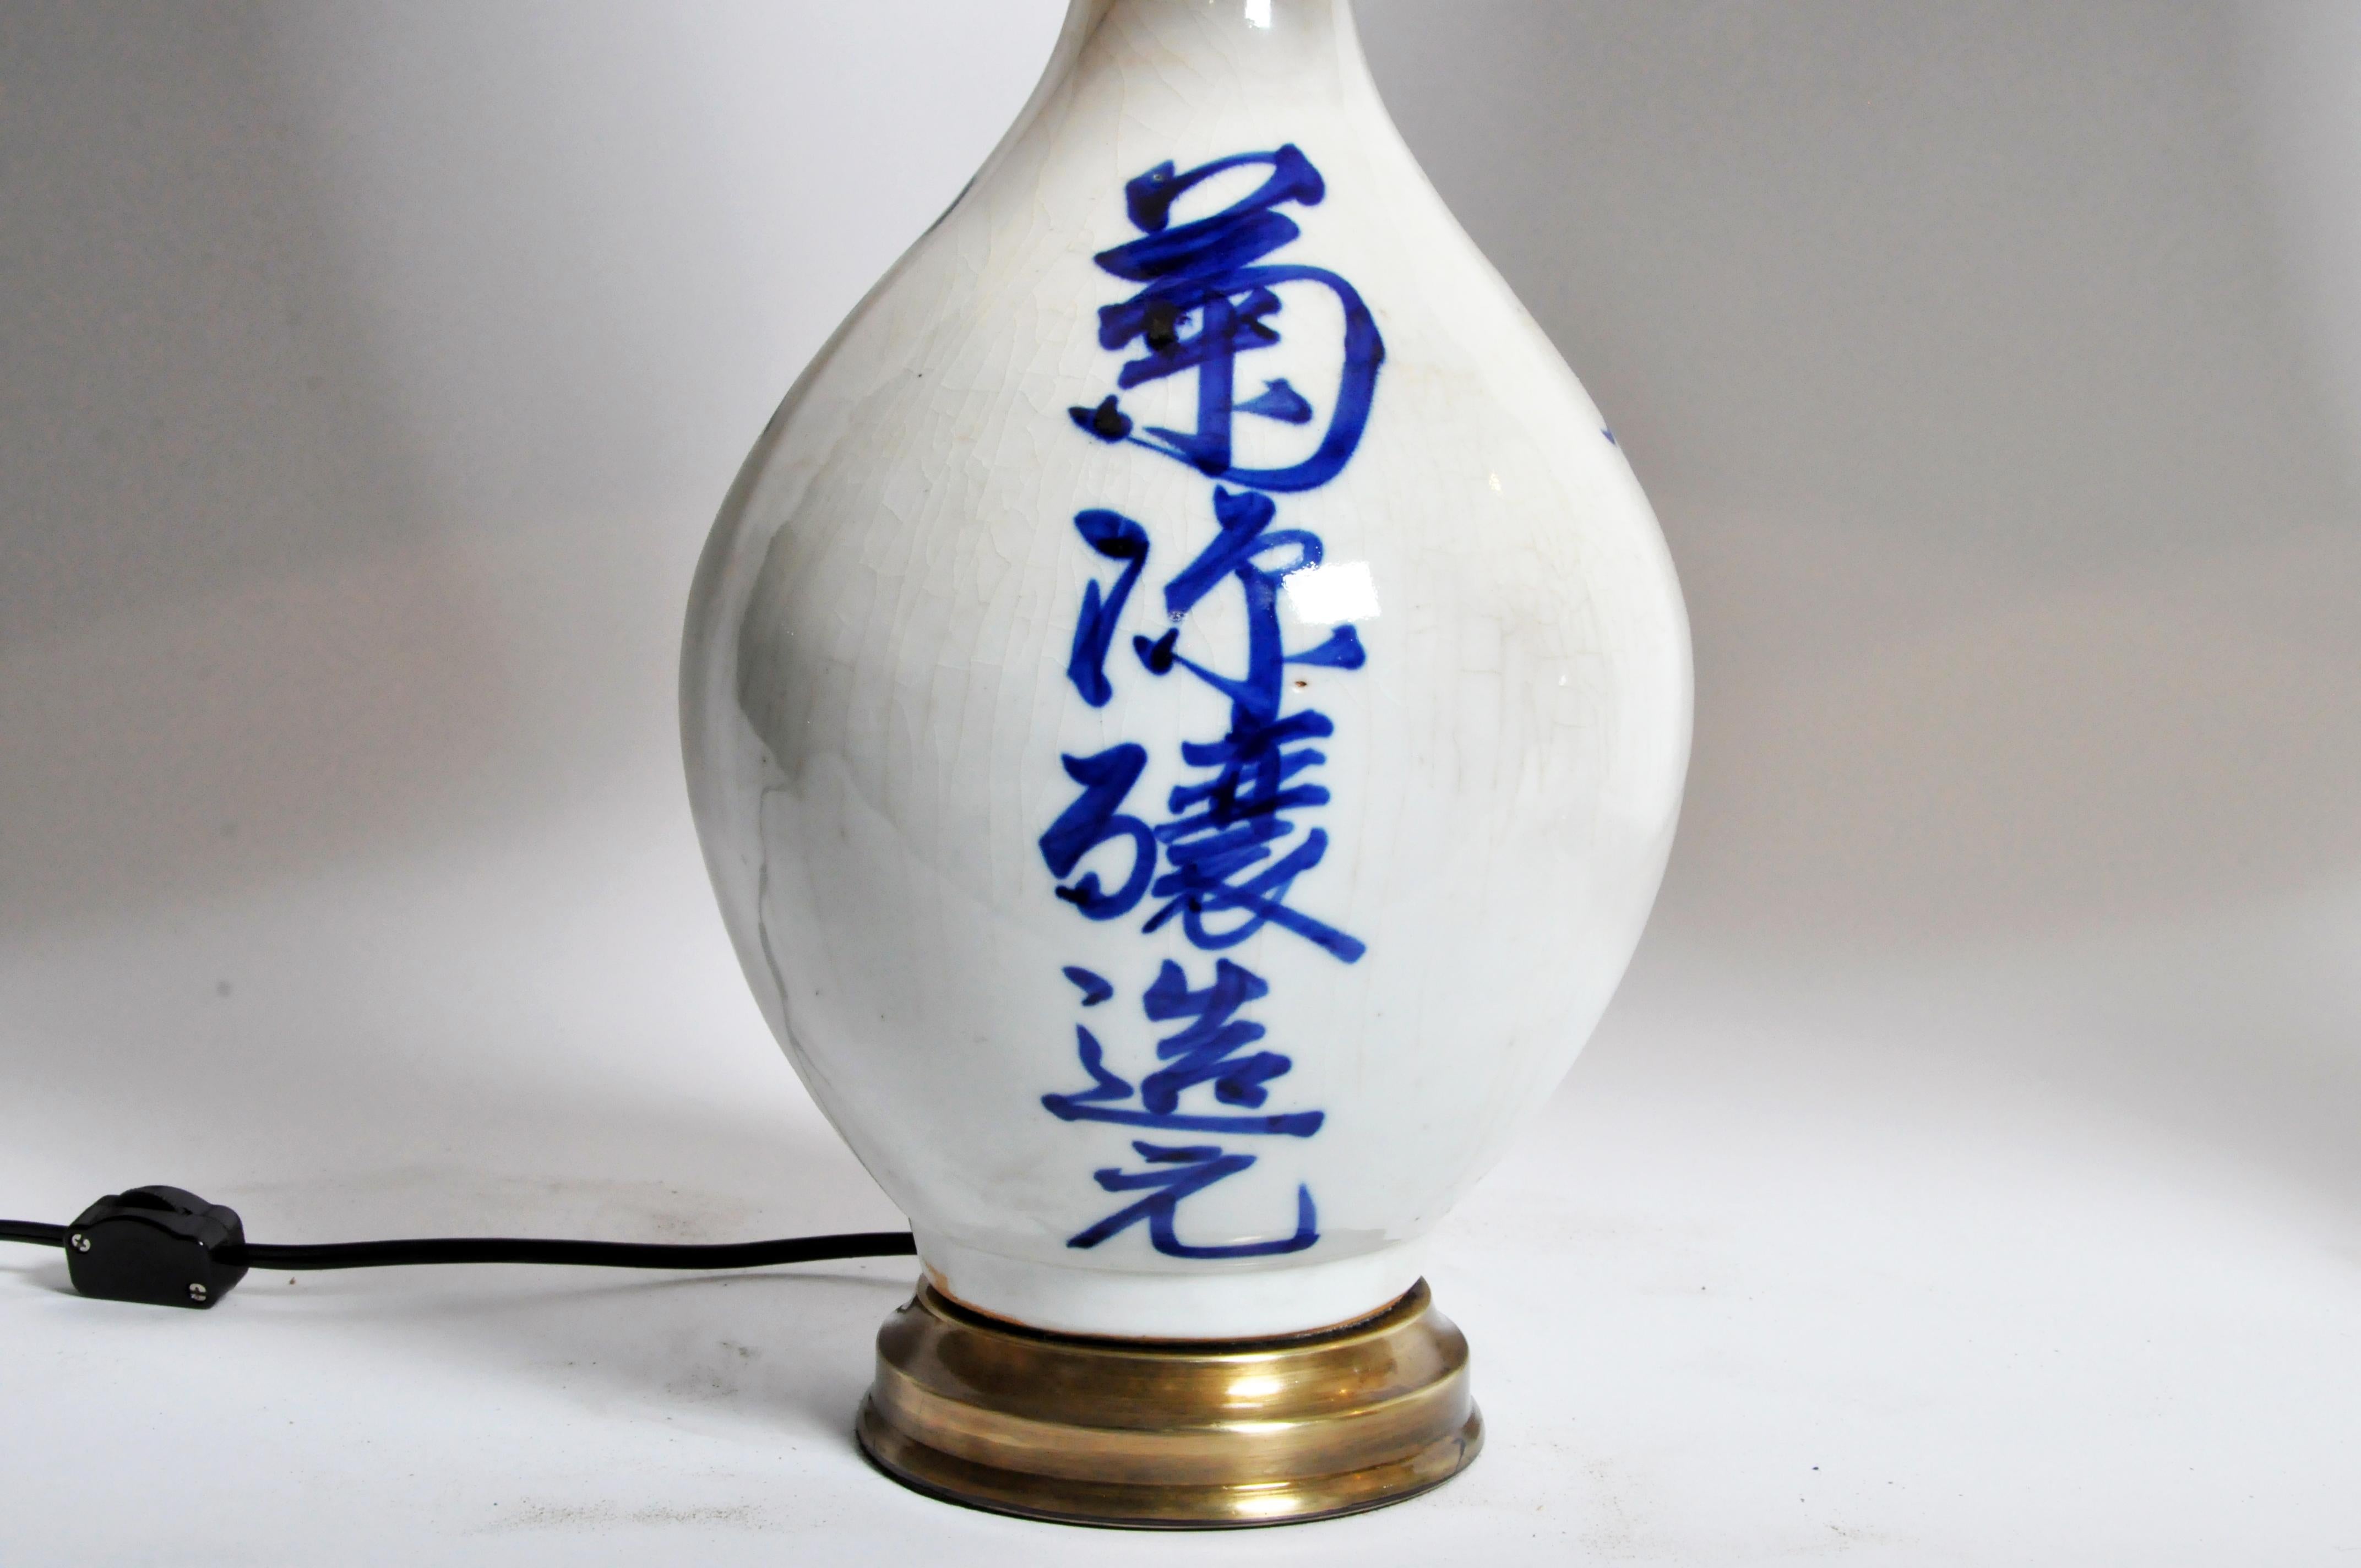 Japanese Sake Bottles Converted to Lamps 10